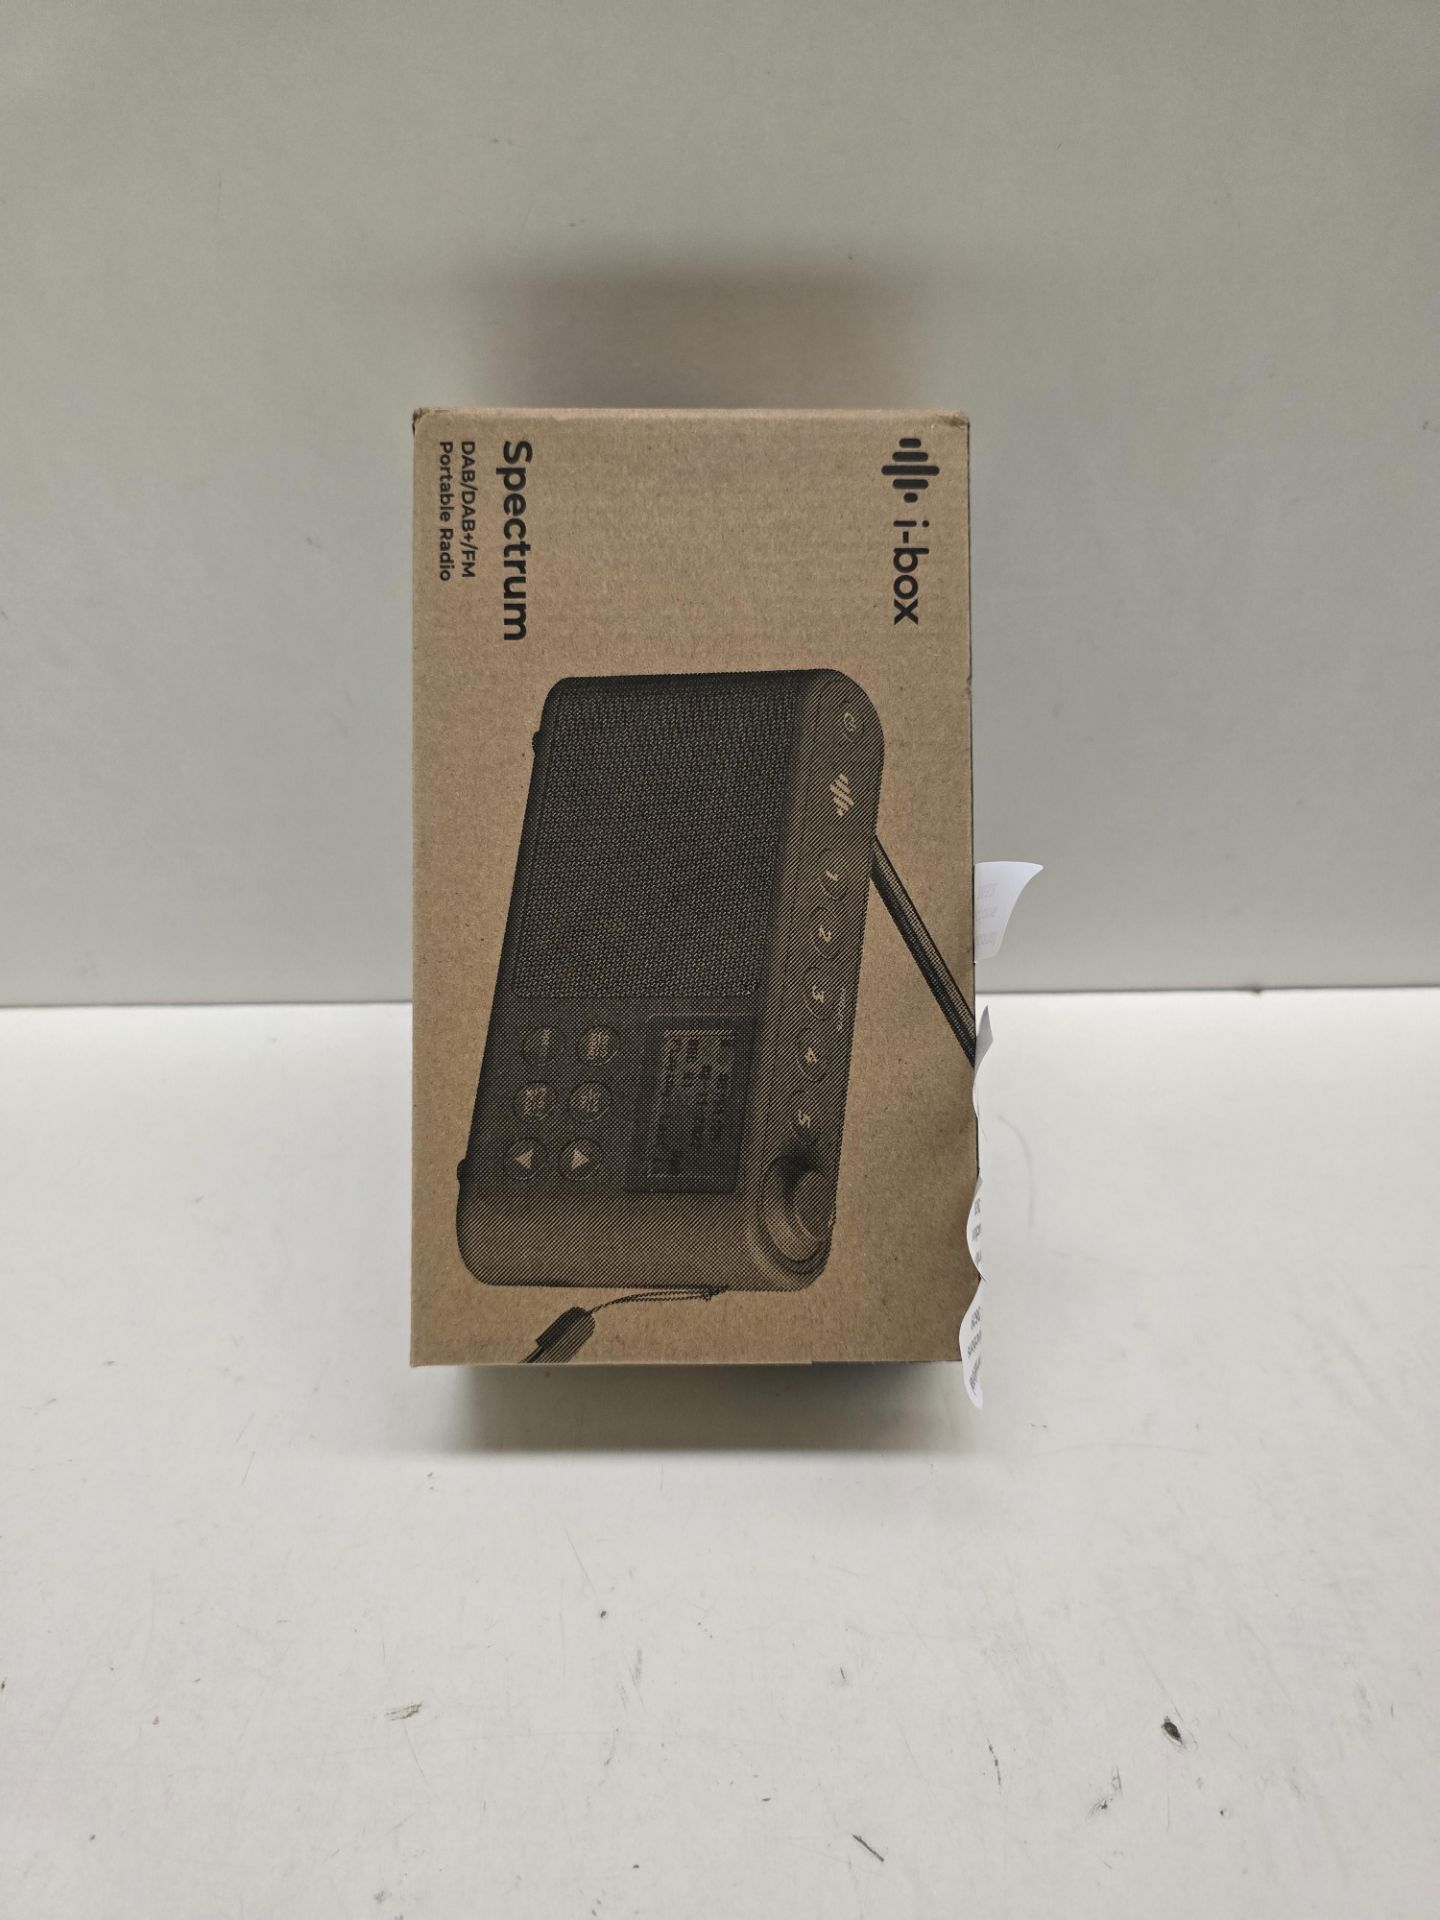 RRP £36.52 DAB Radio Portable - Image 2 of 2